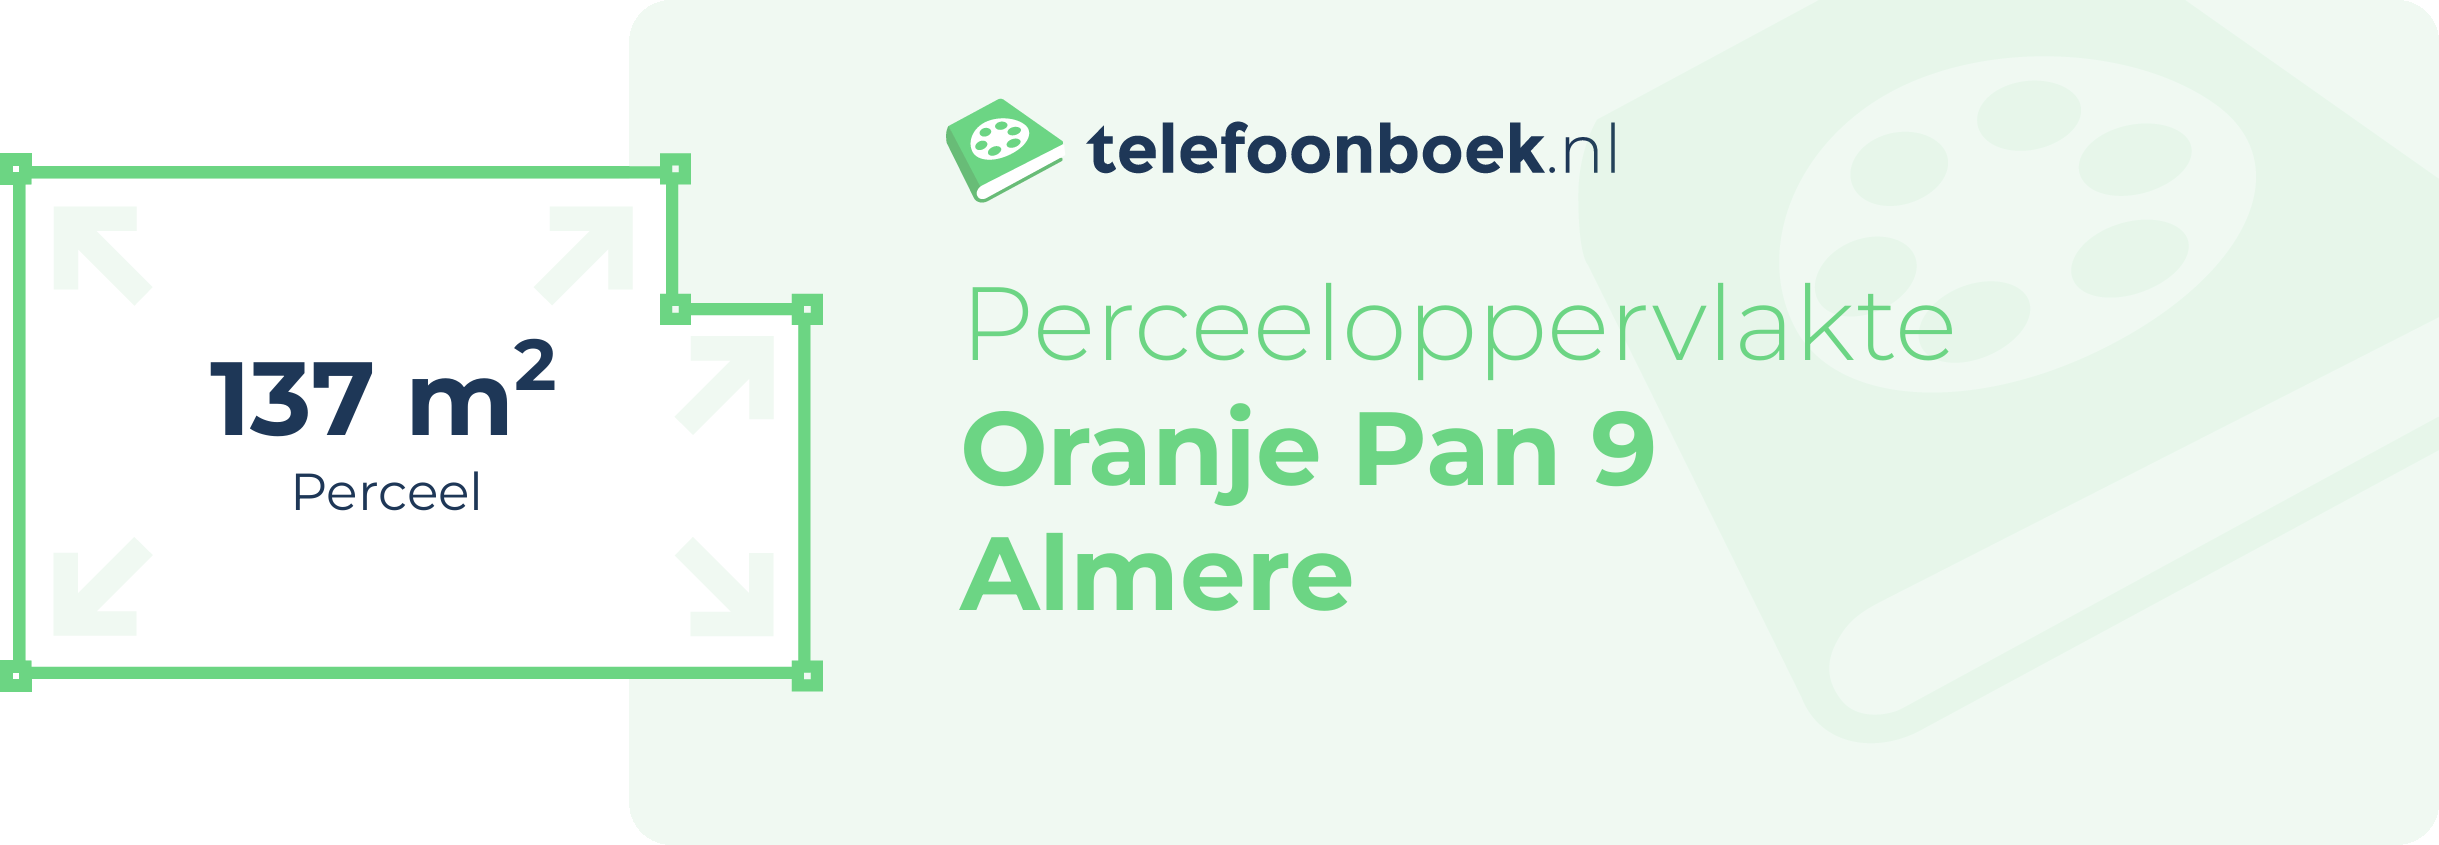 Perceeloppervlakte Oranje Pan 9 Almere